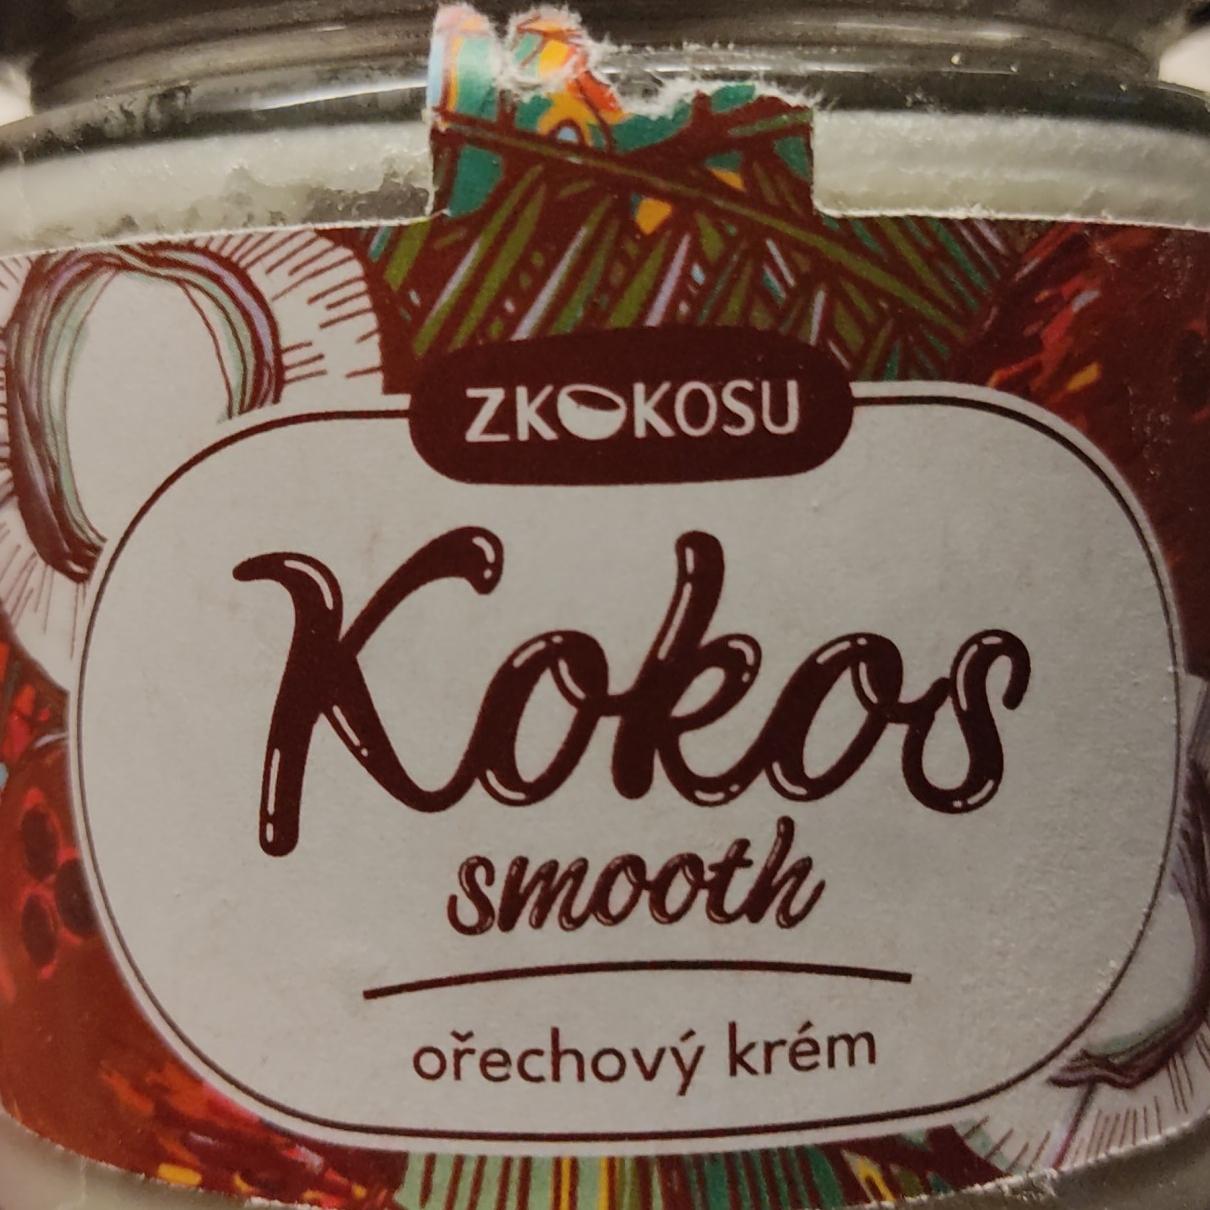 Fotografie - Kokos smooth ořechový krém zKokosu